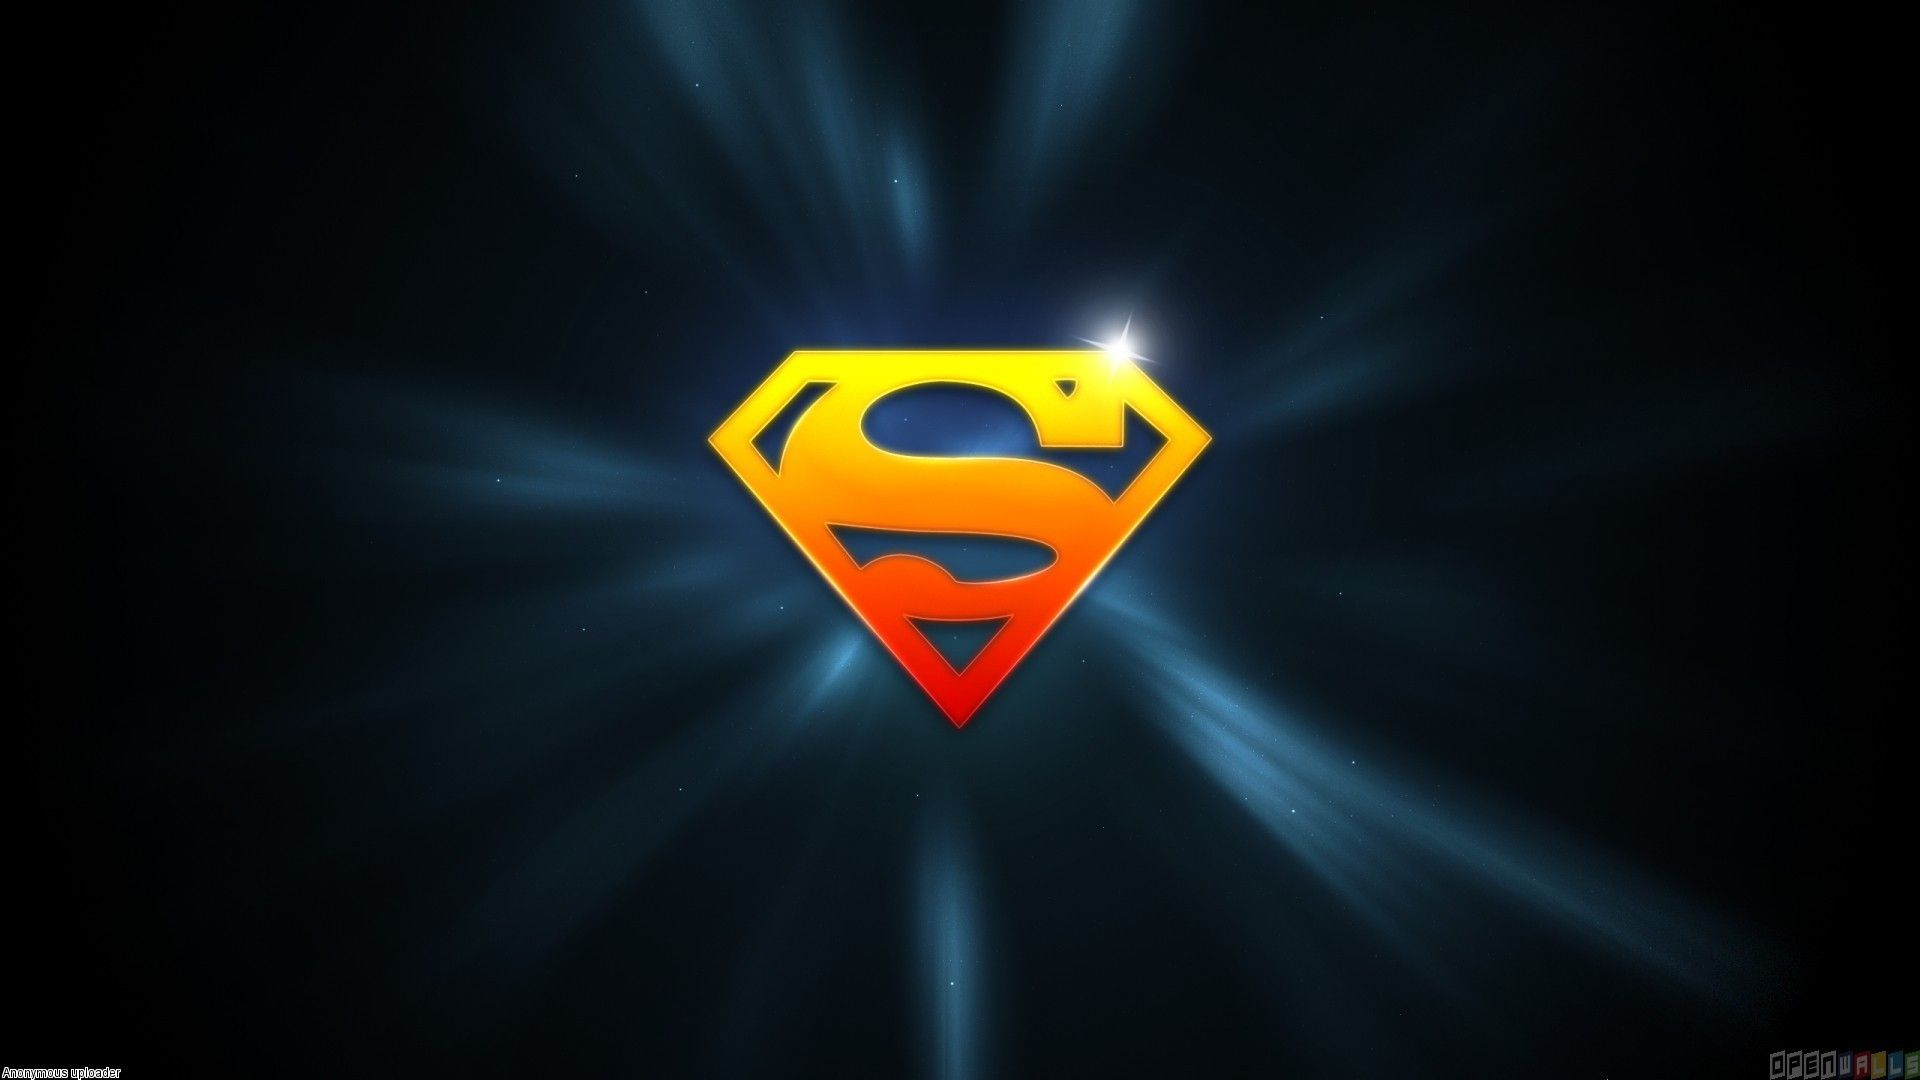 1920x1080 I \u003c3 superman | Superman wallpaper logo, Superman wallpaper, Cool purple background